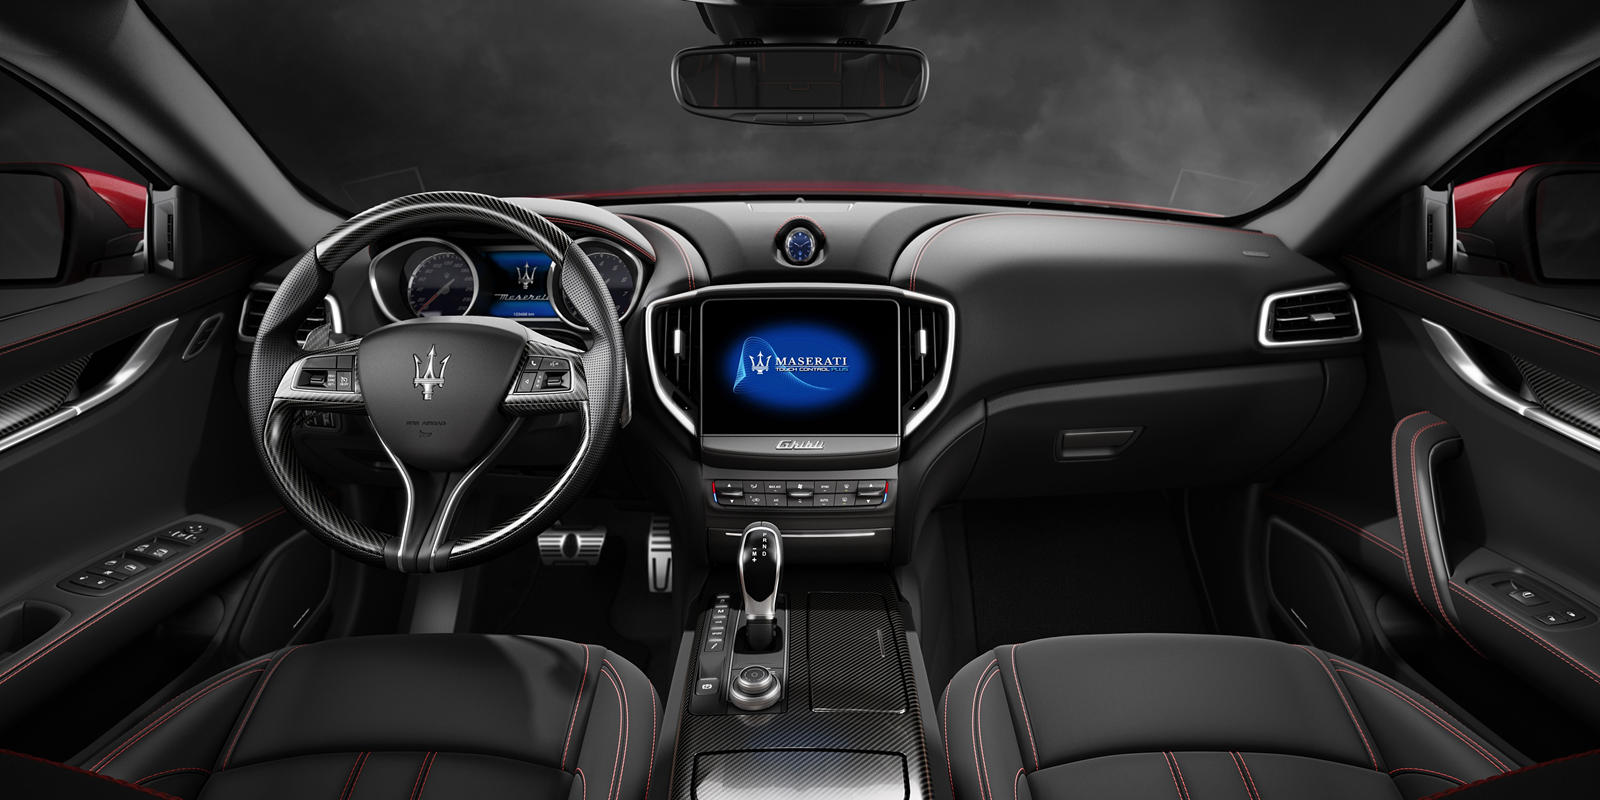 2015 Maserati Ghibli Interior Photos | CarBuzz